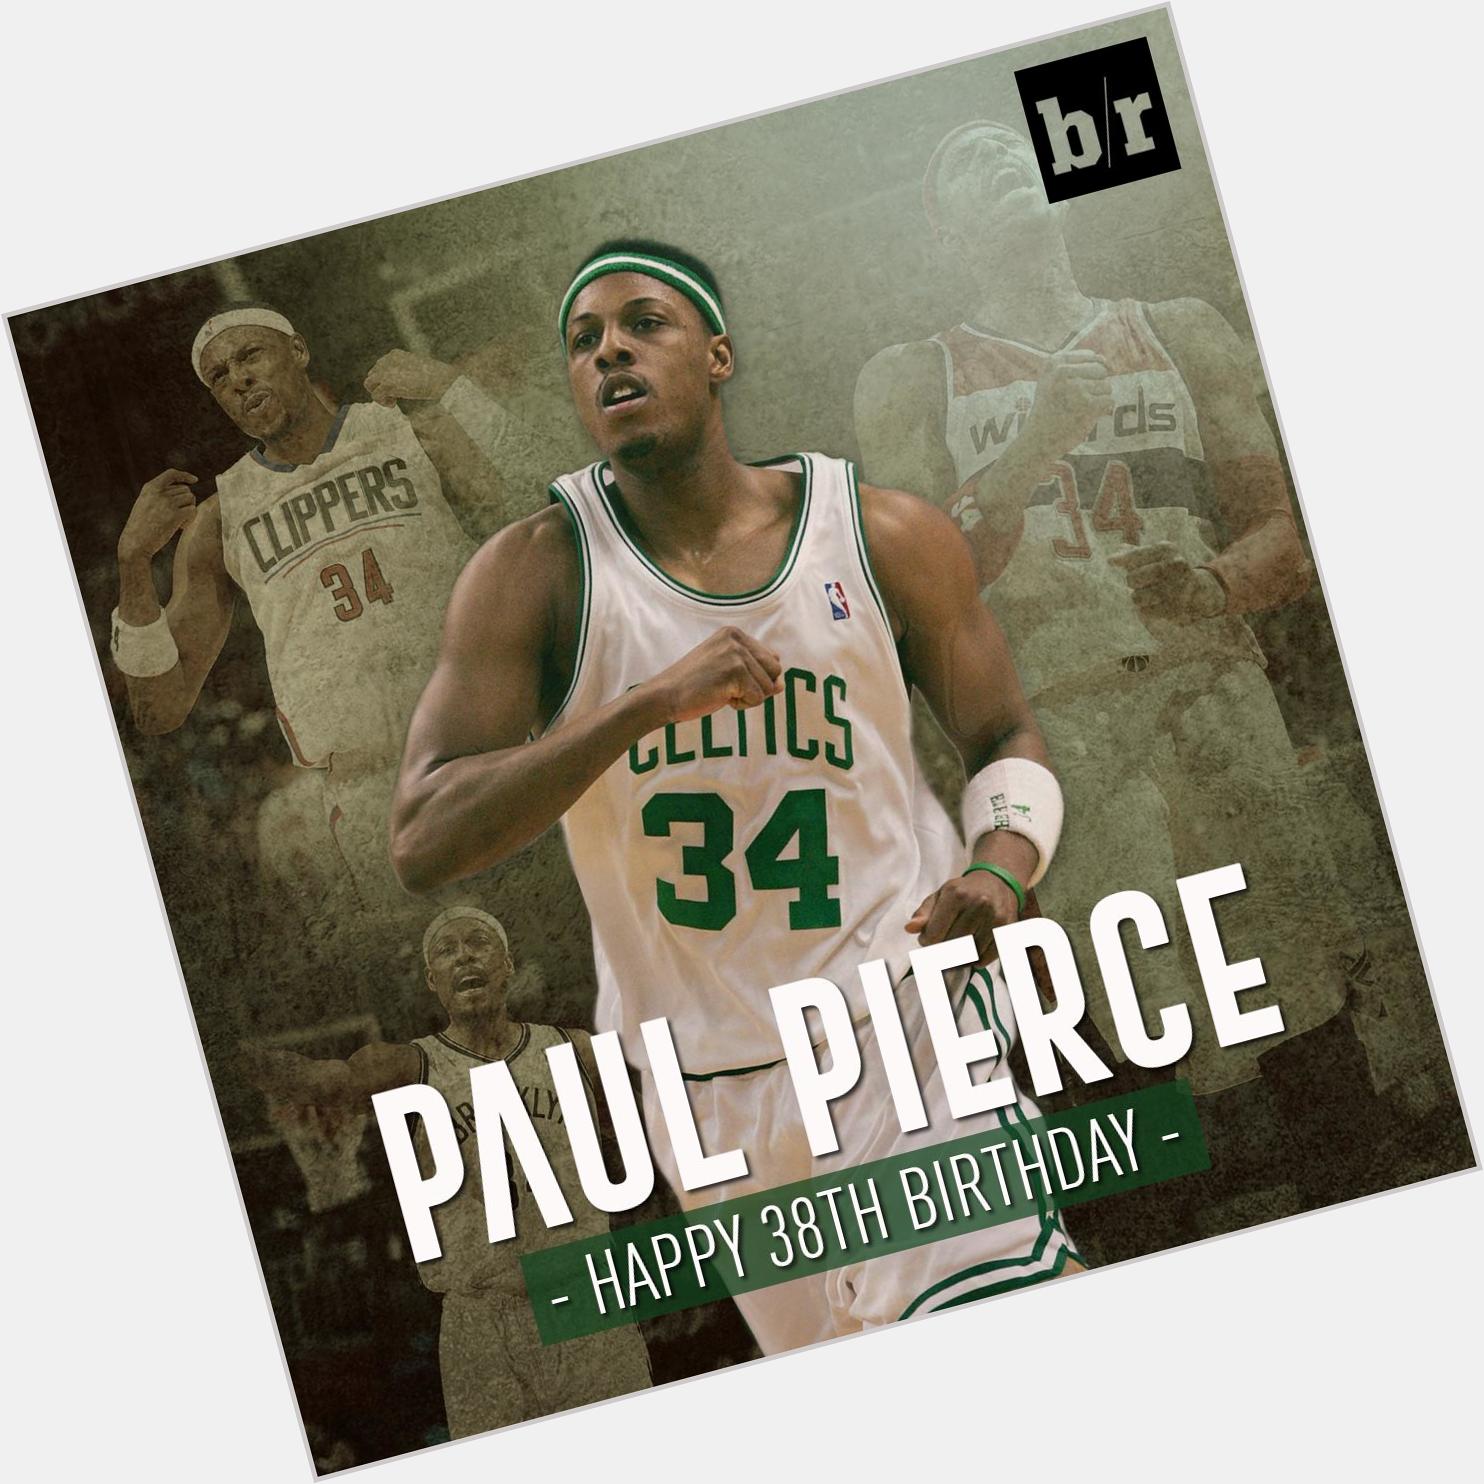 Happy 38th birthday to The Truth, Paul Pierce! 